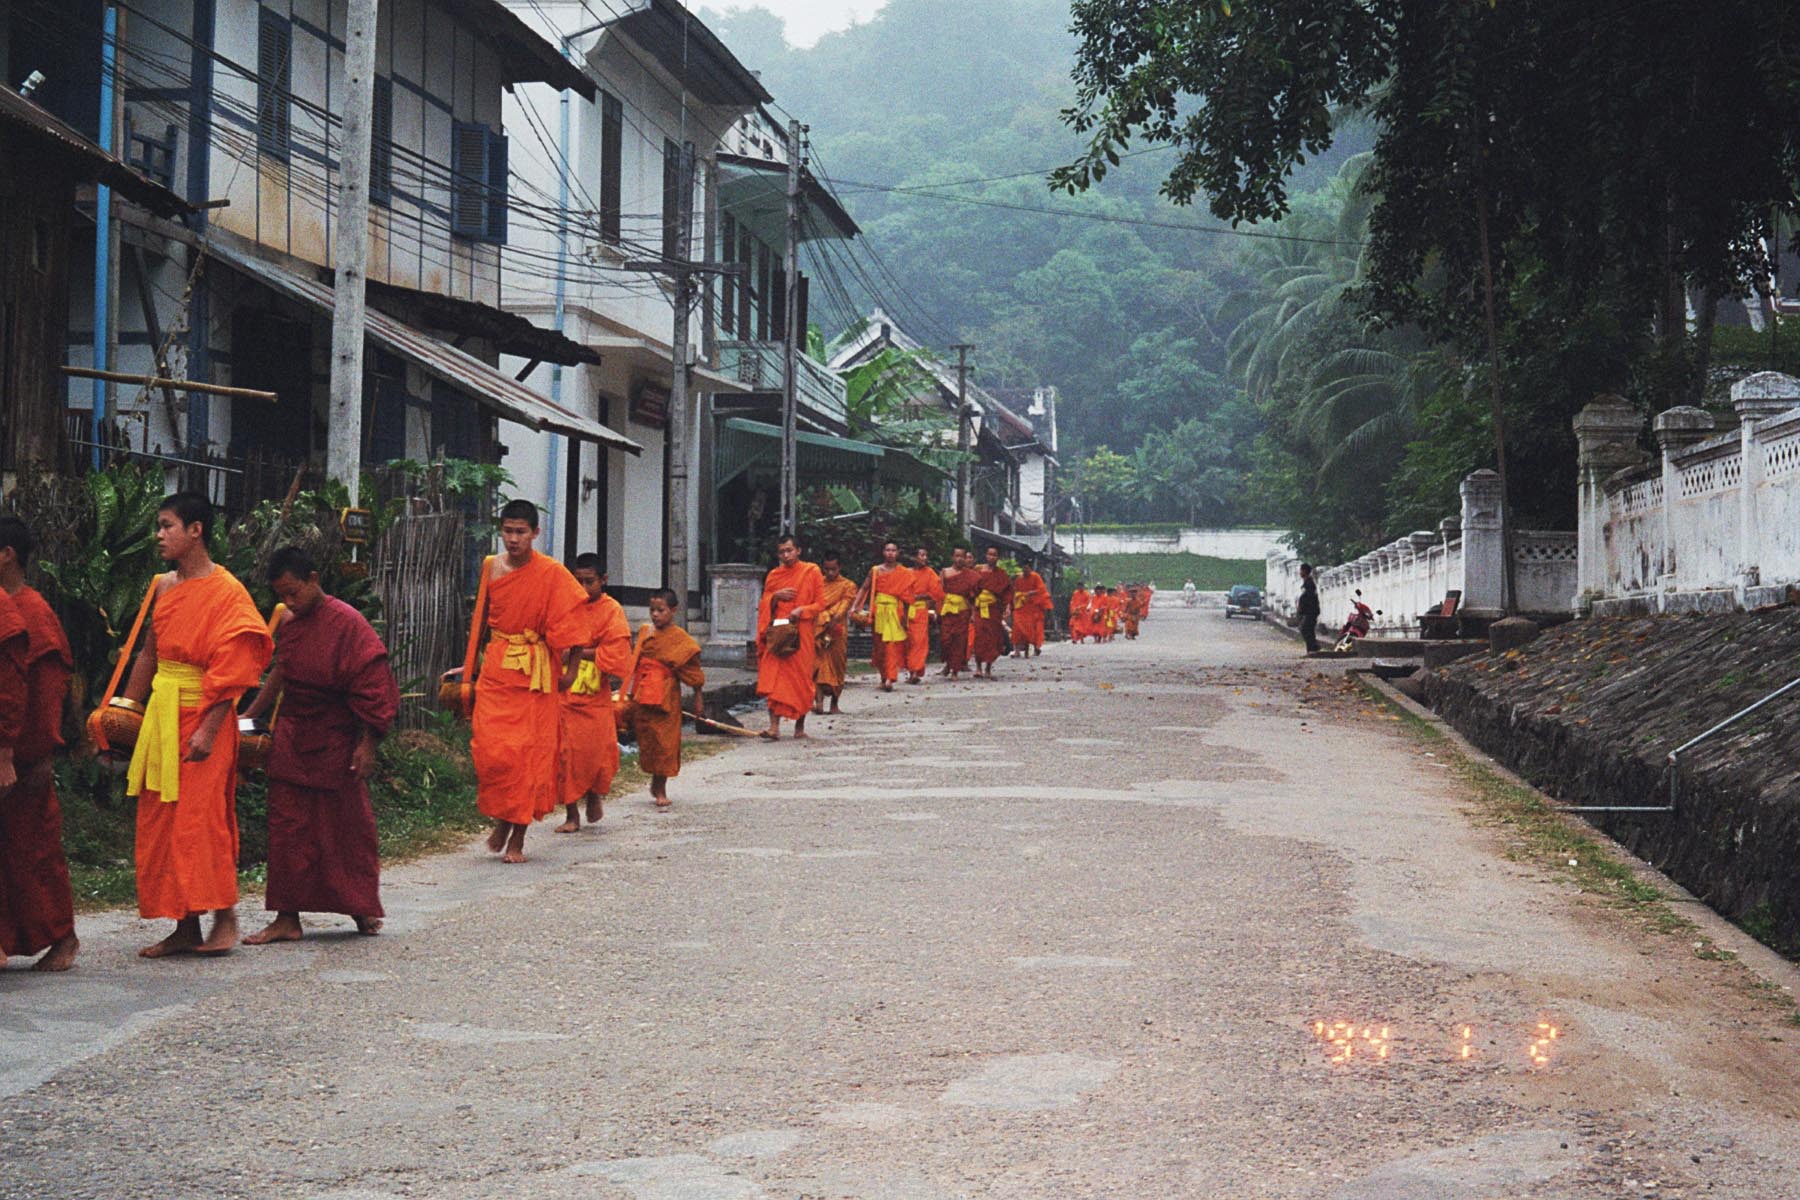 Journey Down the Laos Mekong 3